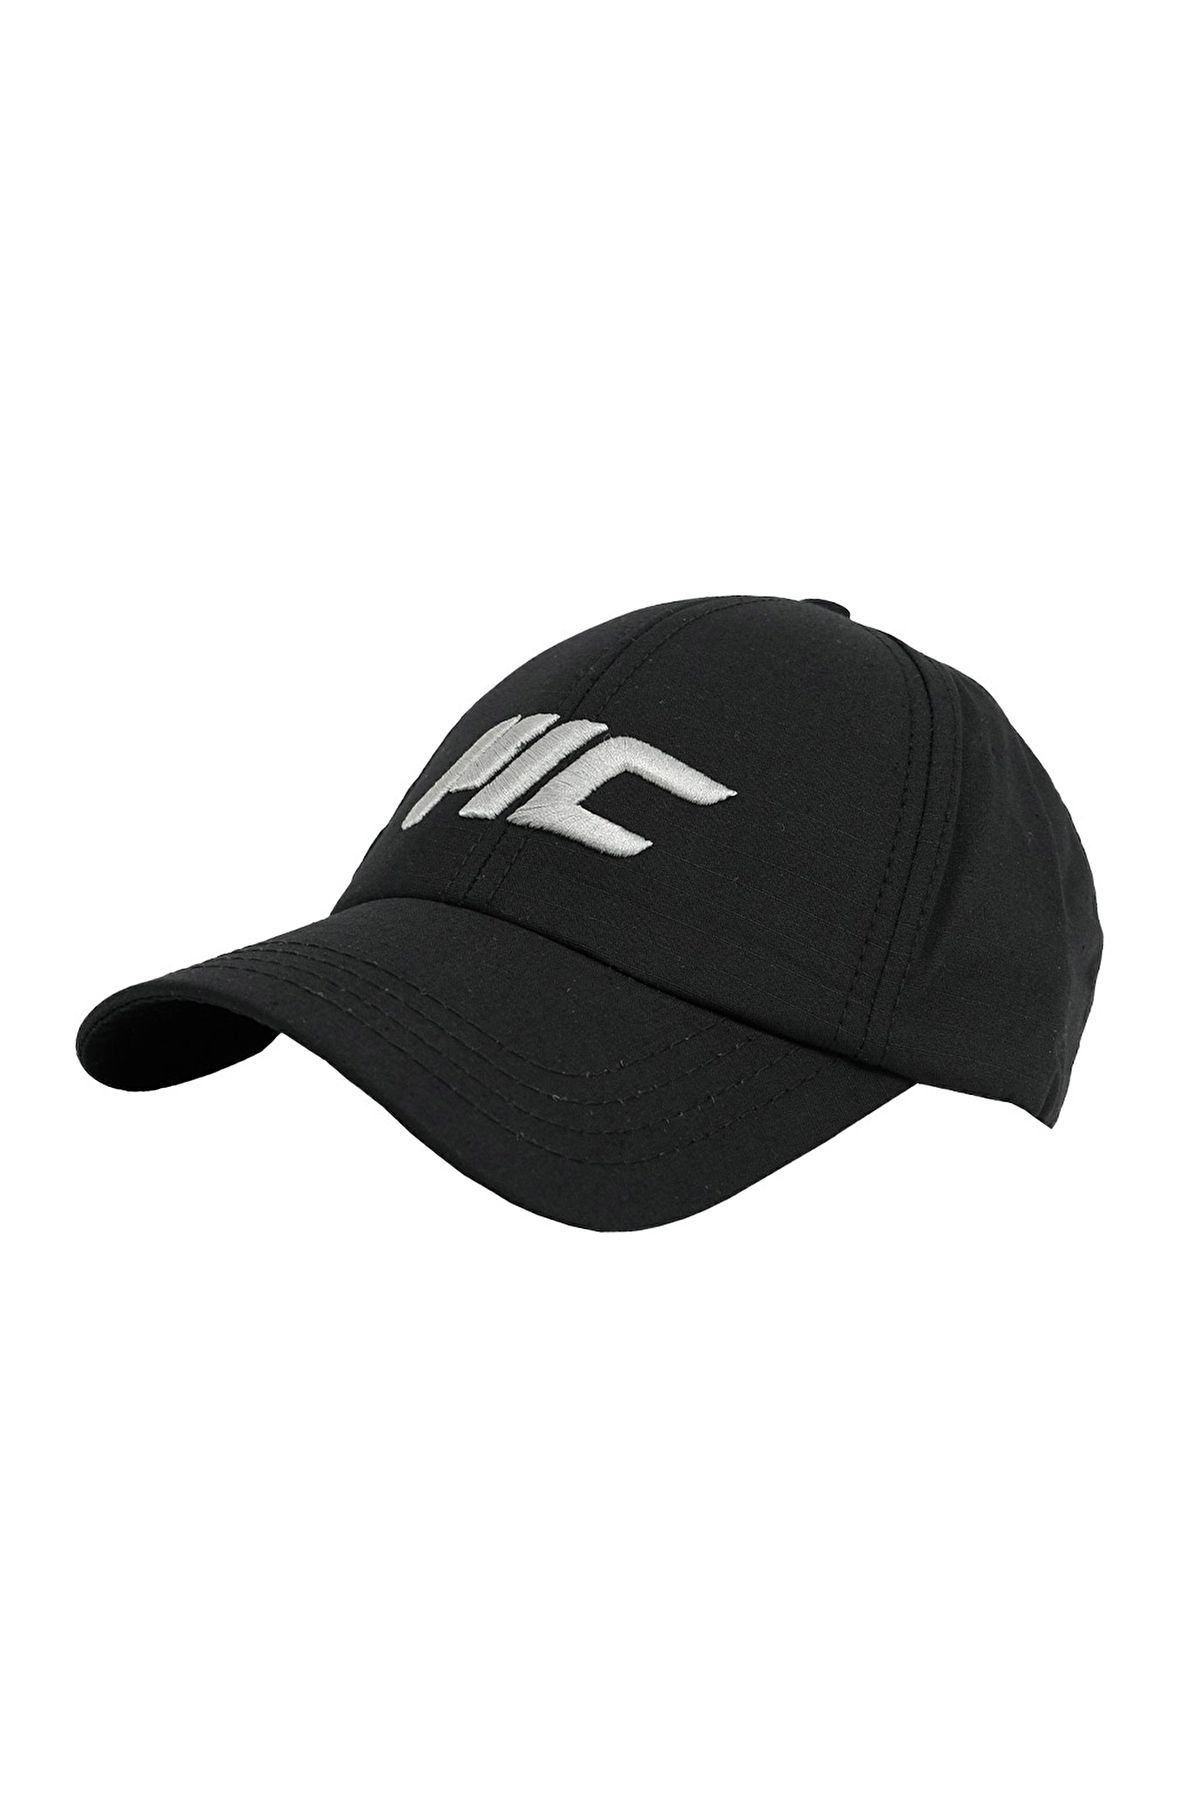 MUSCLECLOTH Big Logo Şapka Siyah Gri